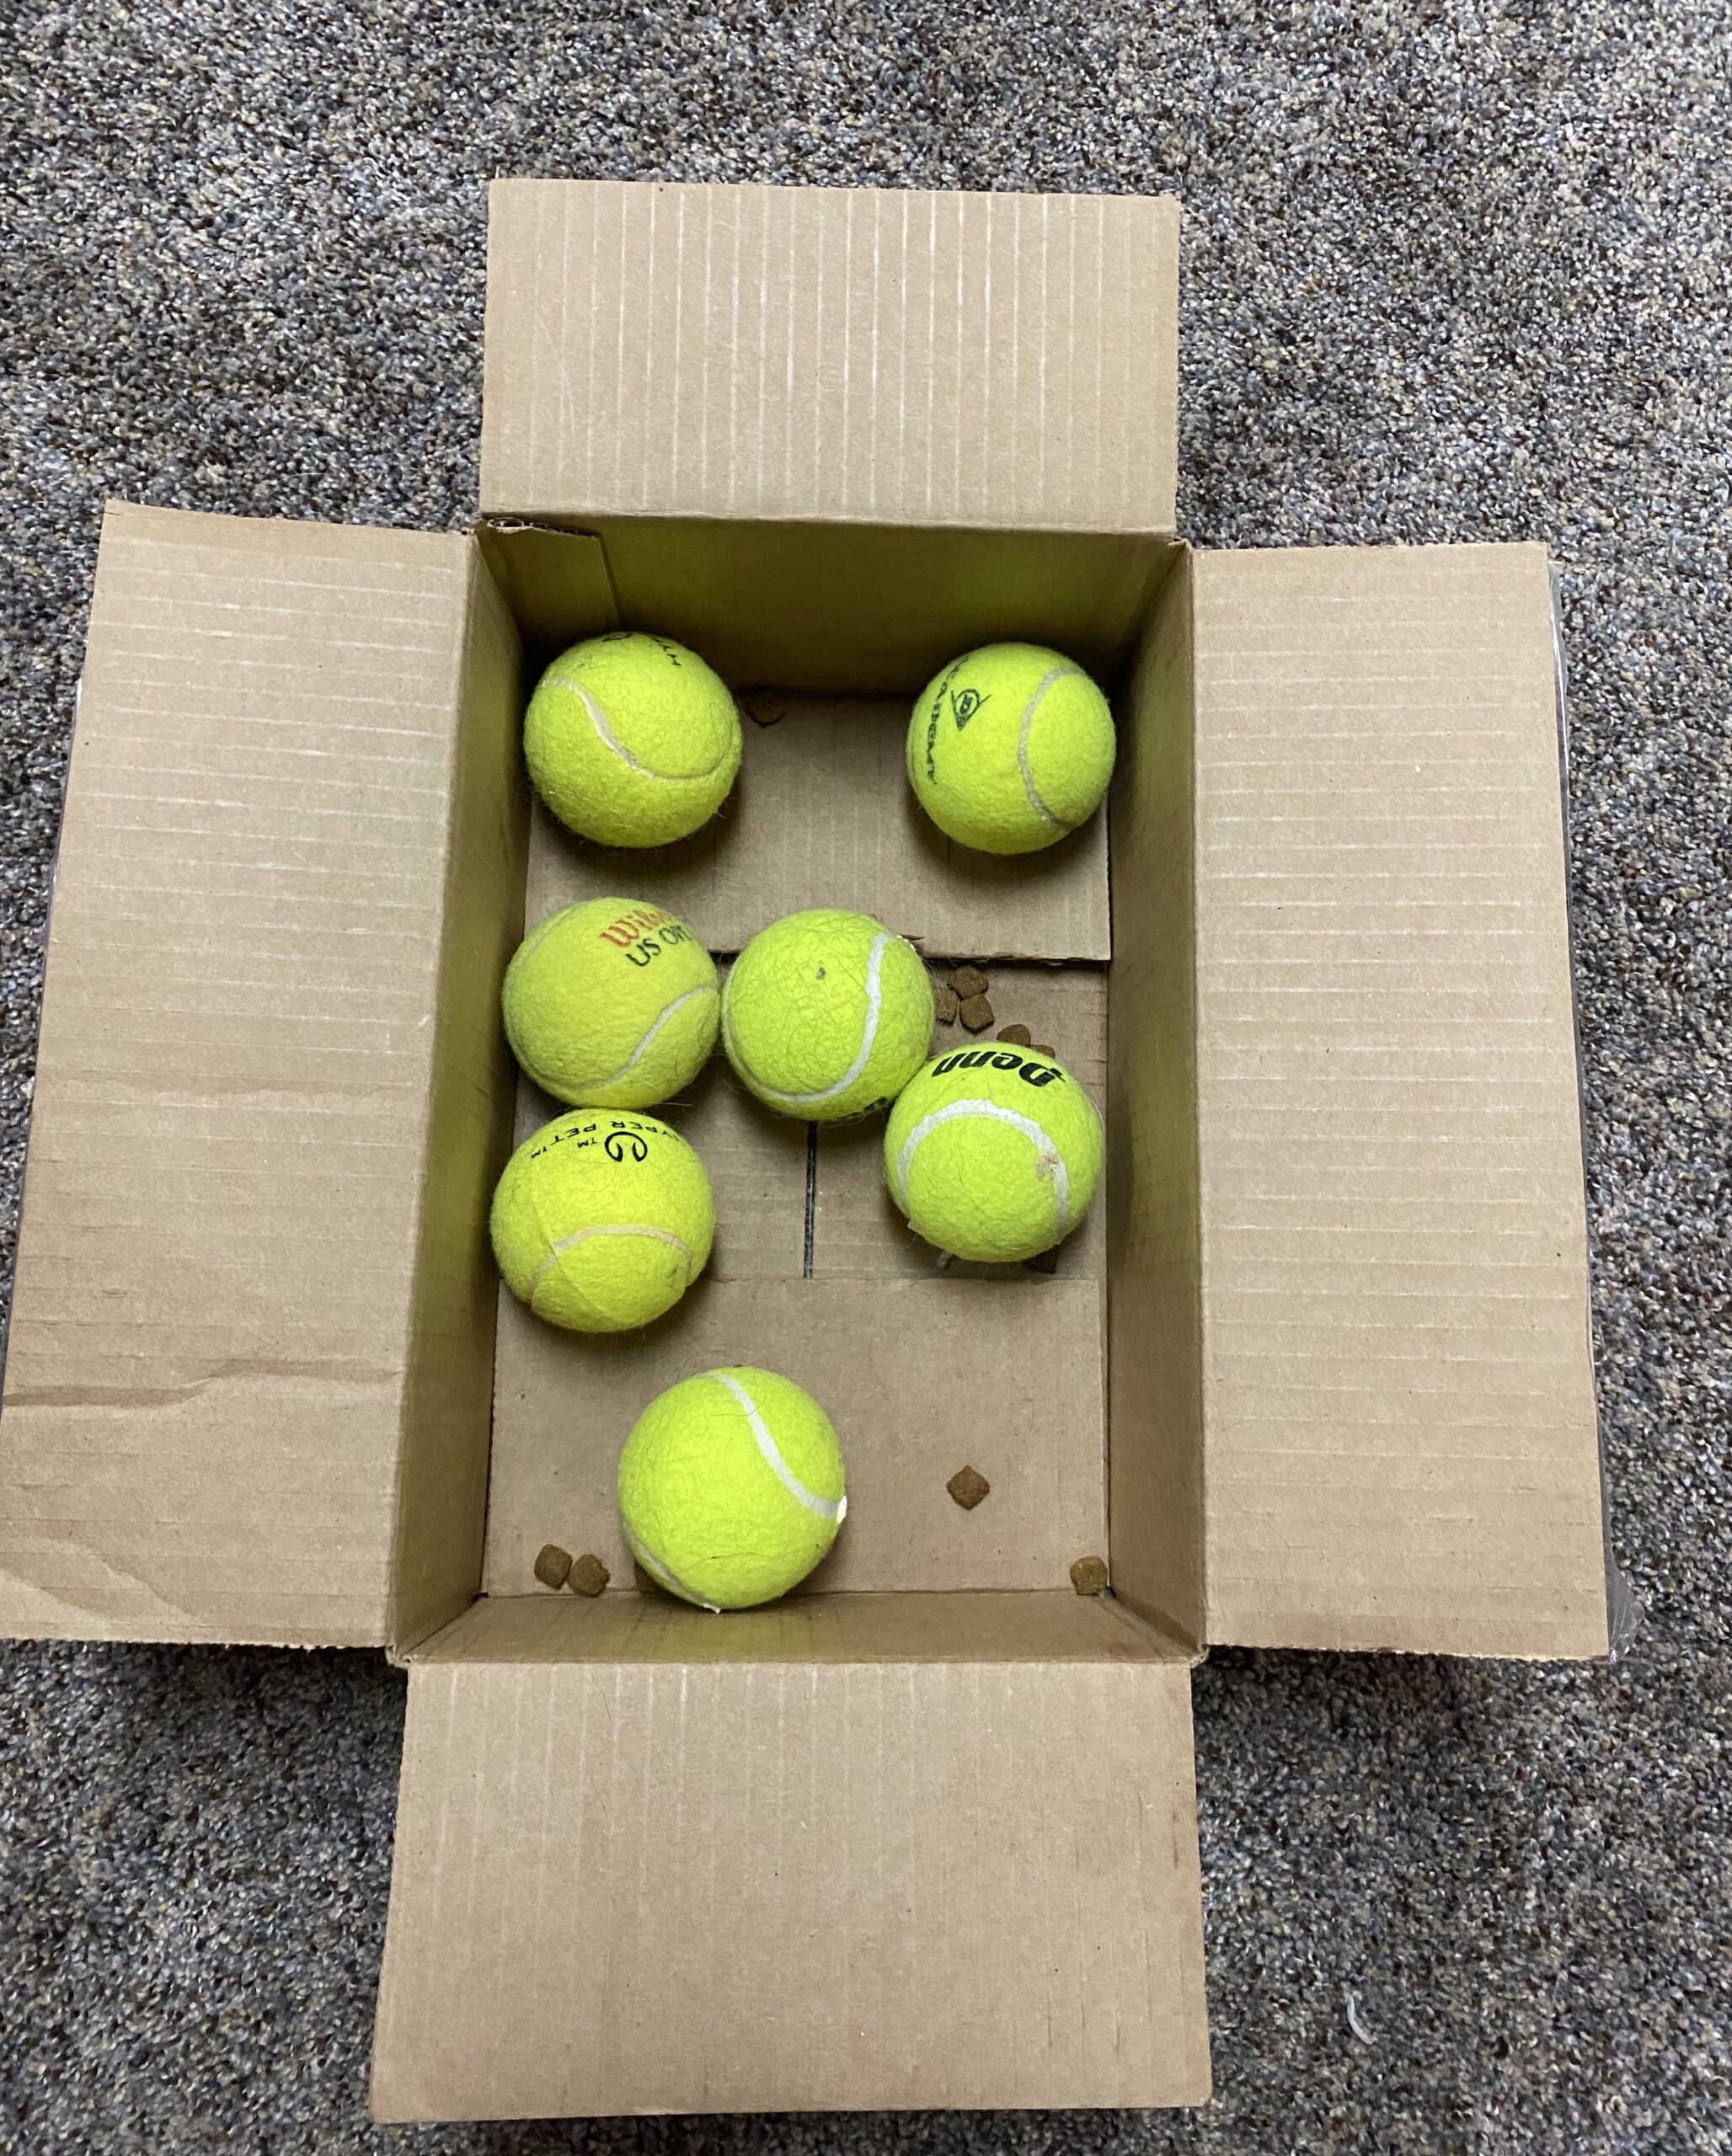 multiple tennis balls